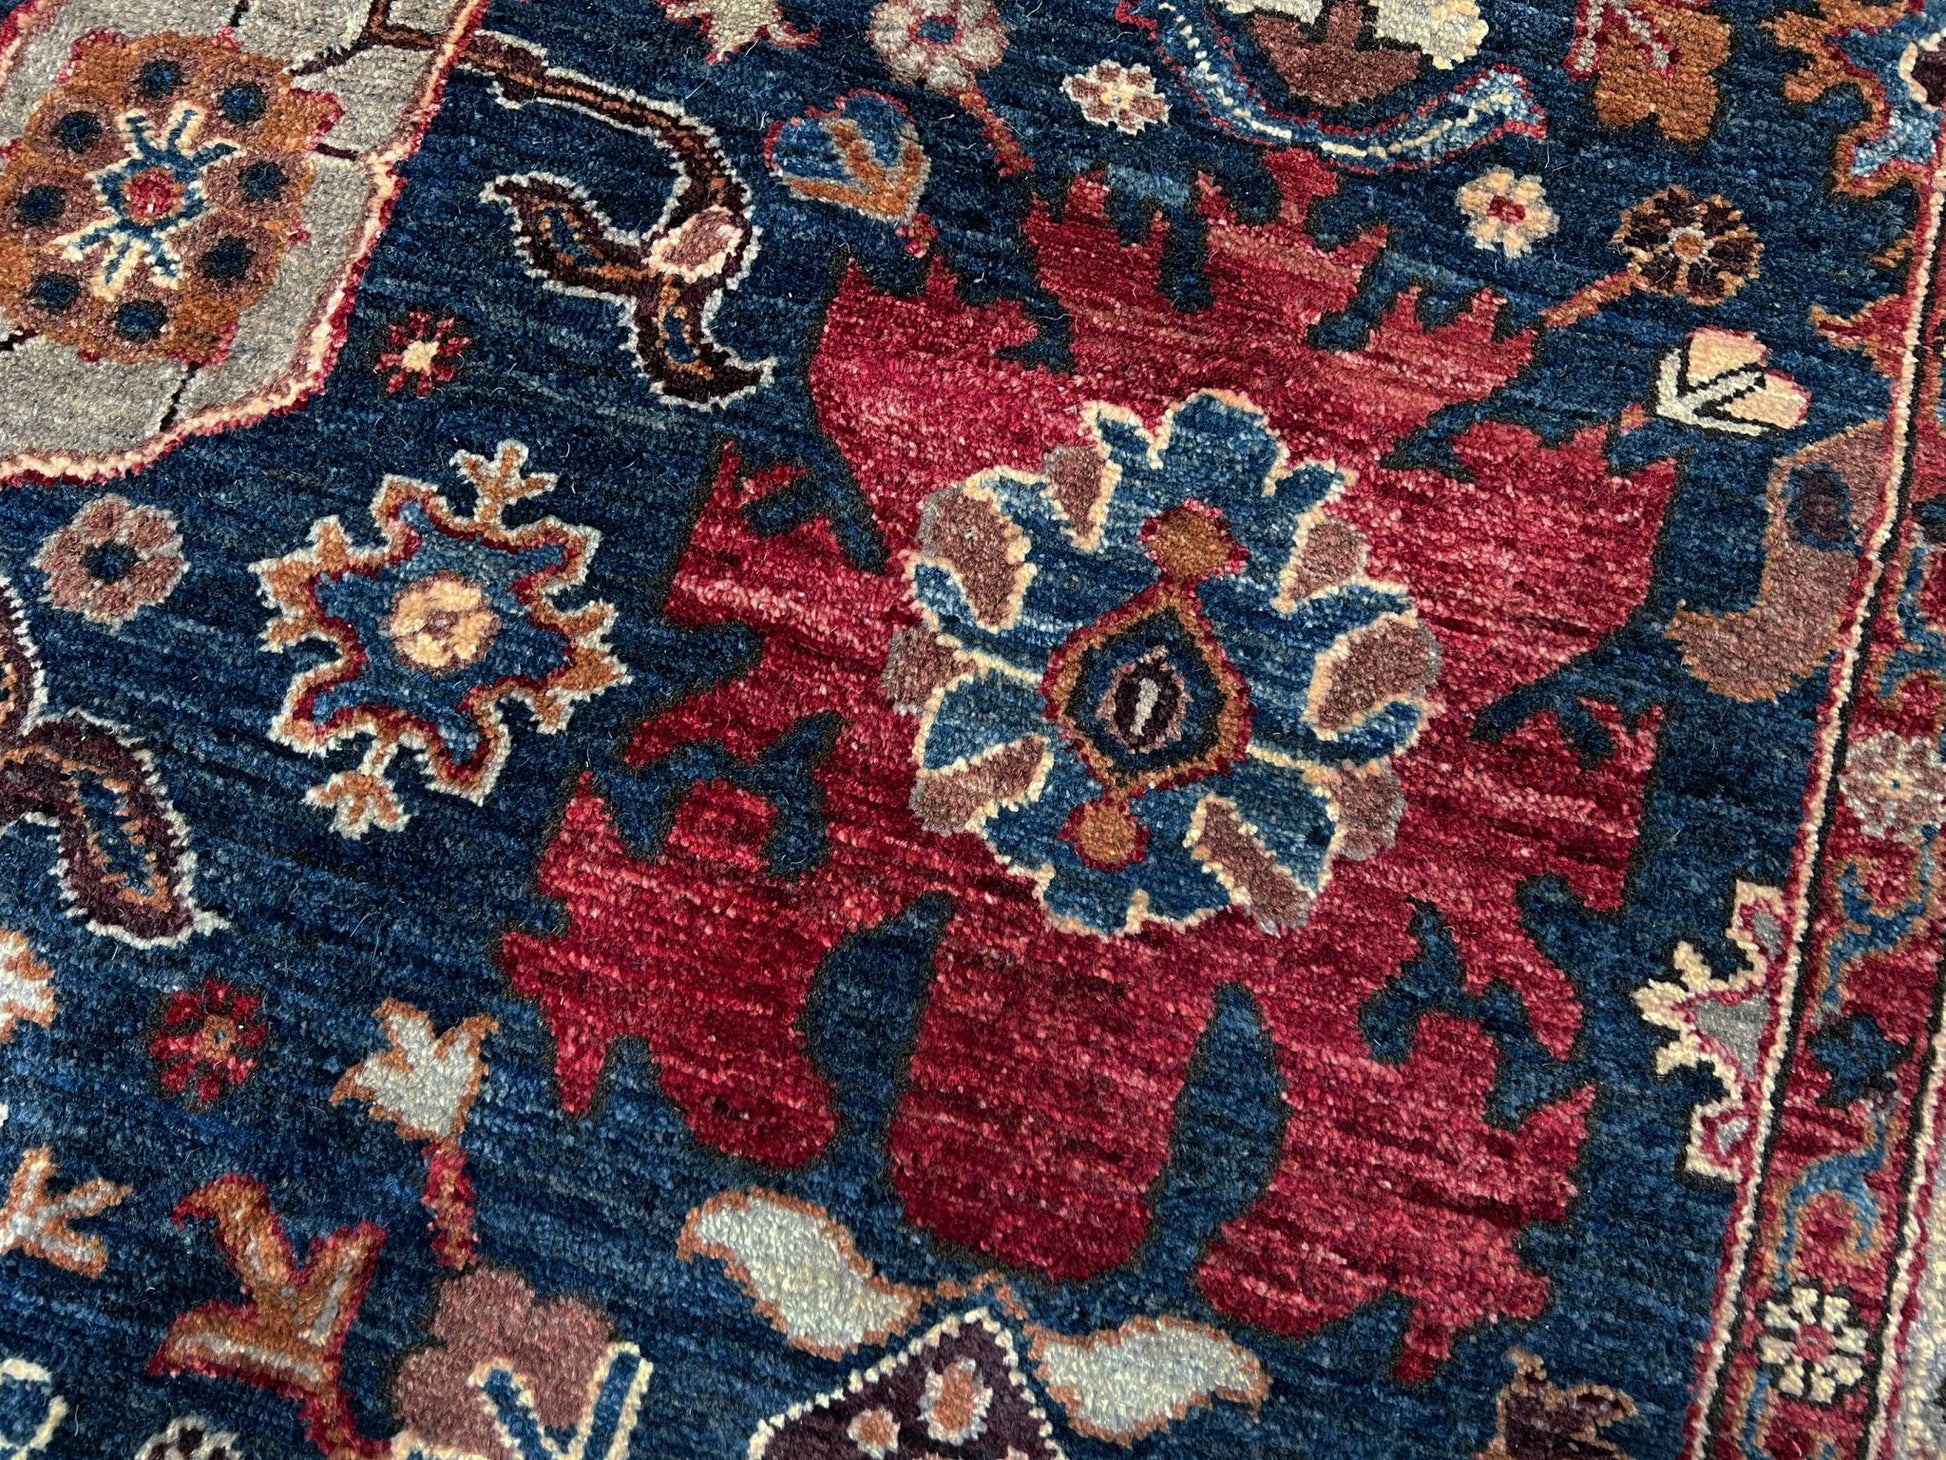 sultani handmade area rug. 9x12 rug for living room. Luxury living room rug shop palo alto menlo park. Oriental rug shop san francisco bay area.